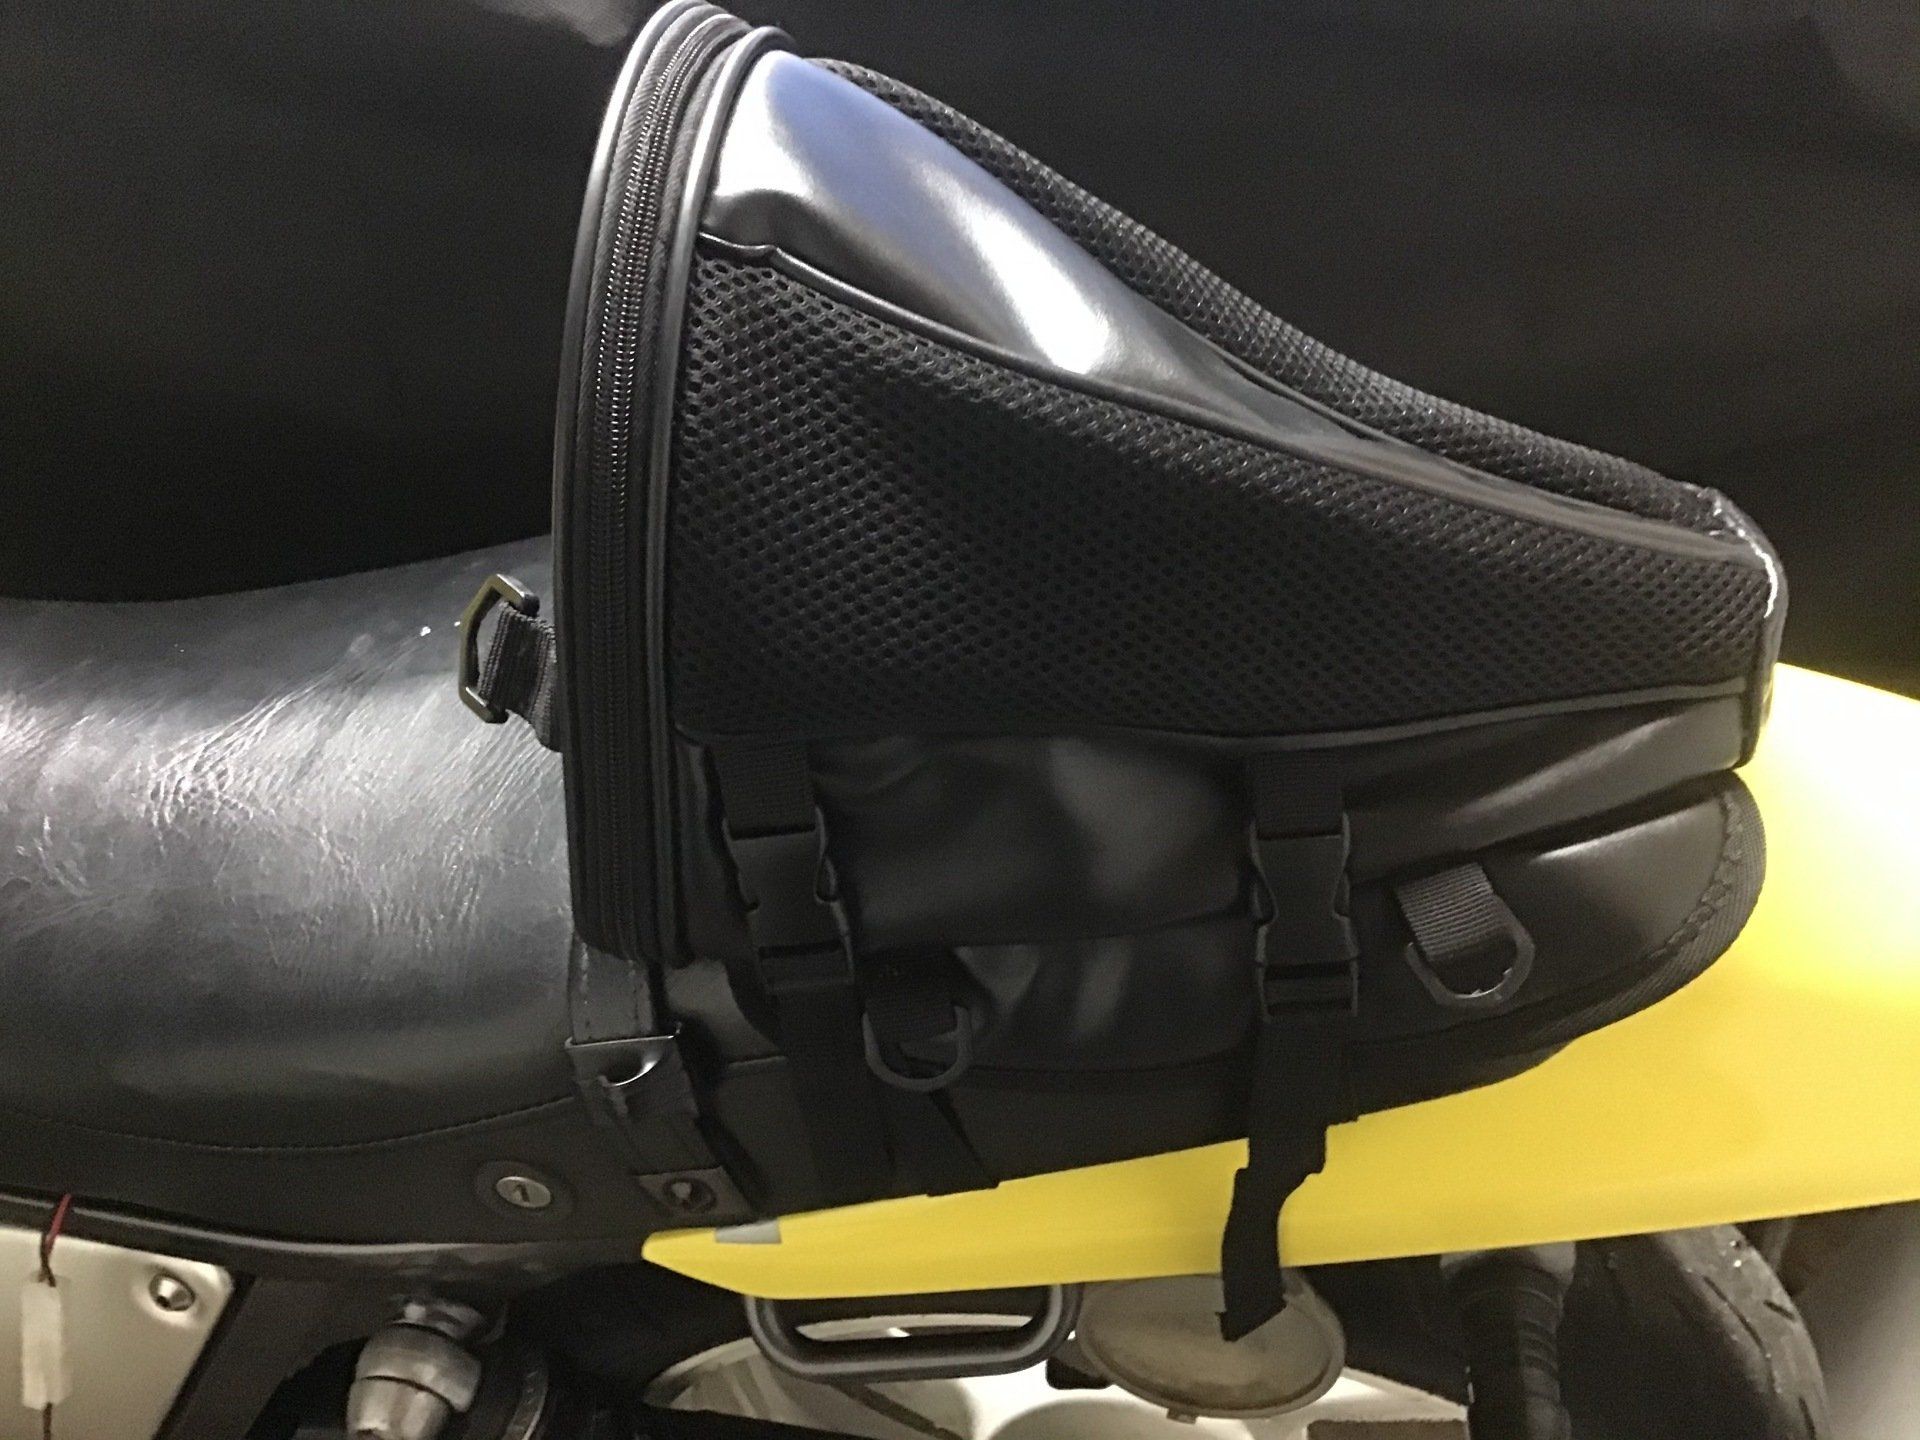 Cheap Ebay tailbag mounted on Yamaha SRX600